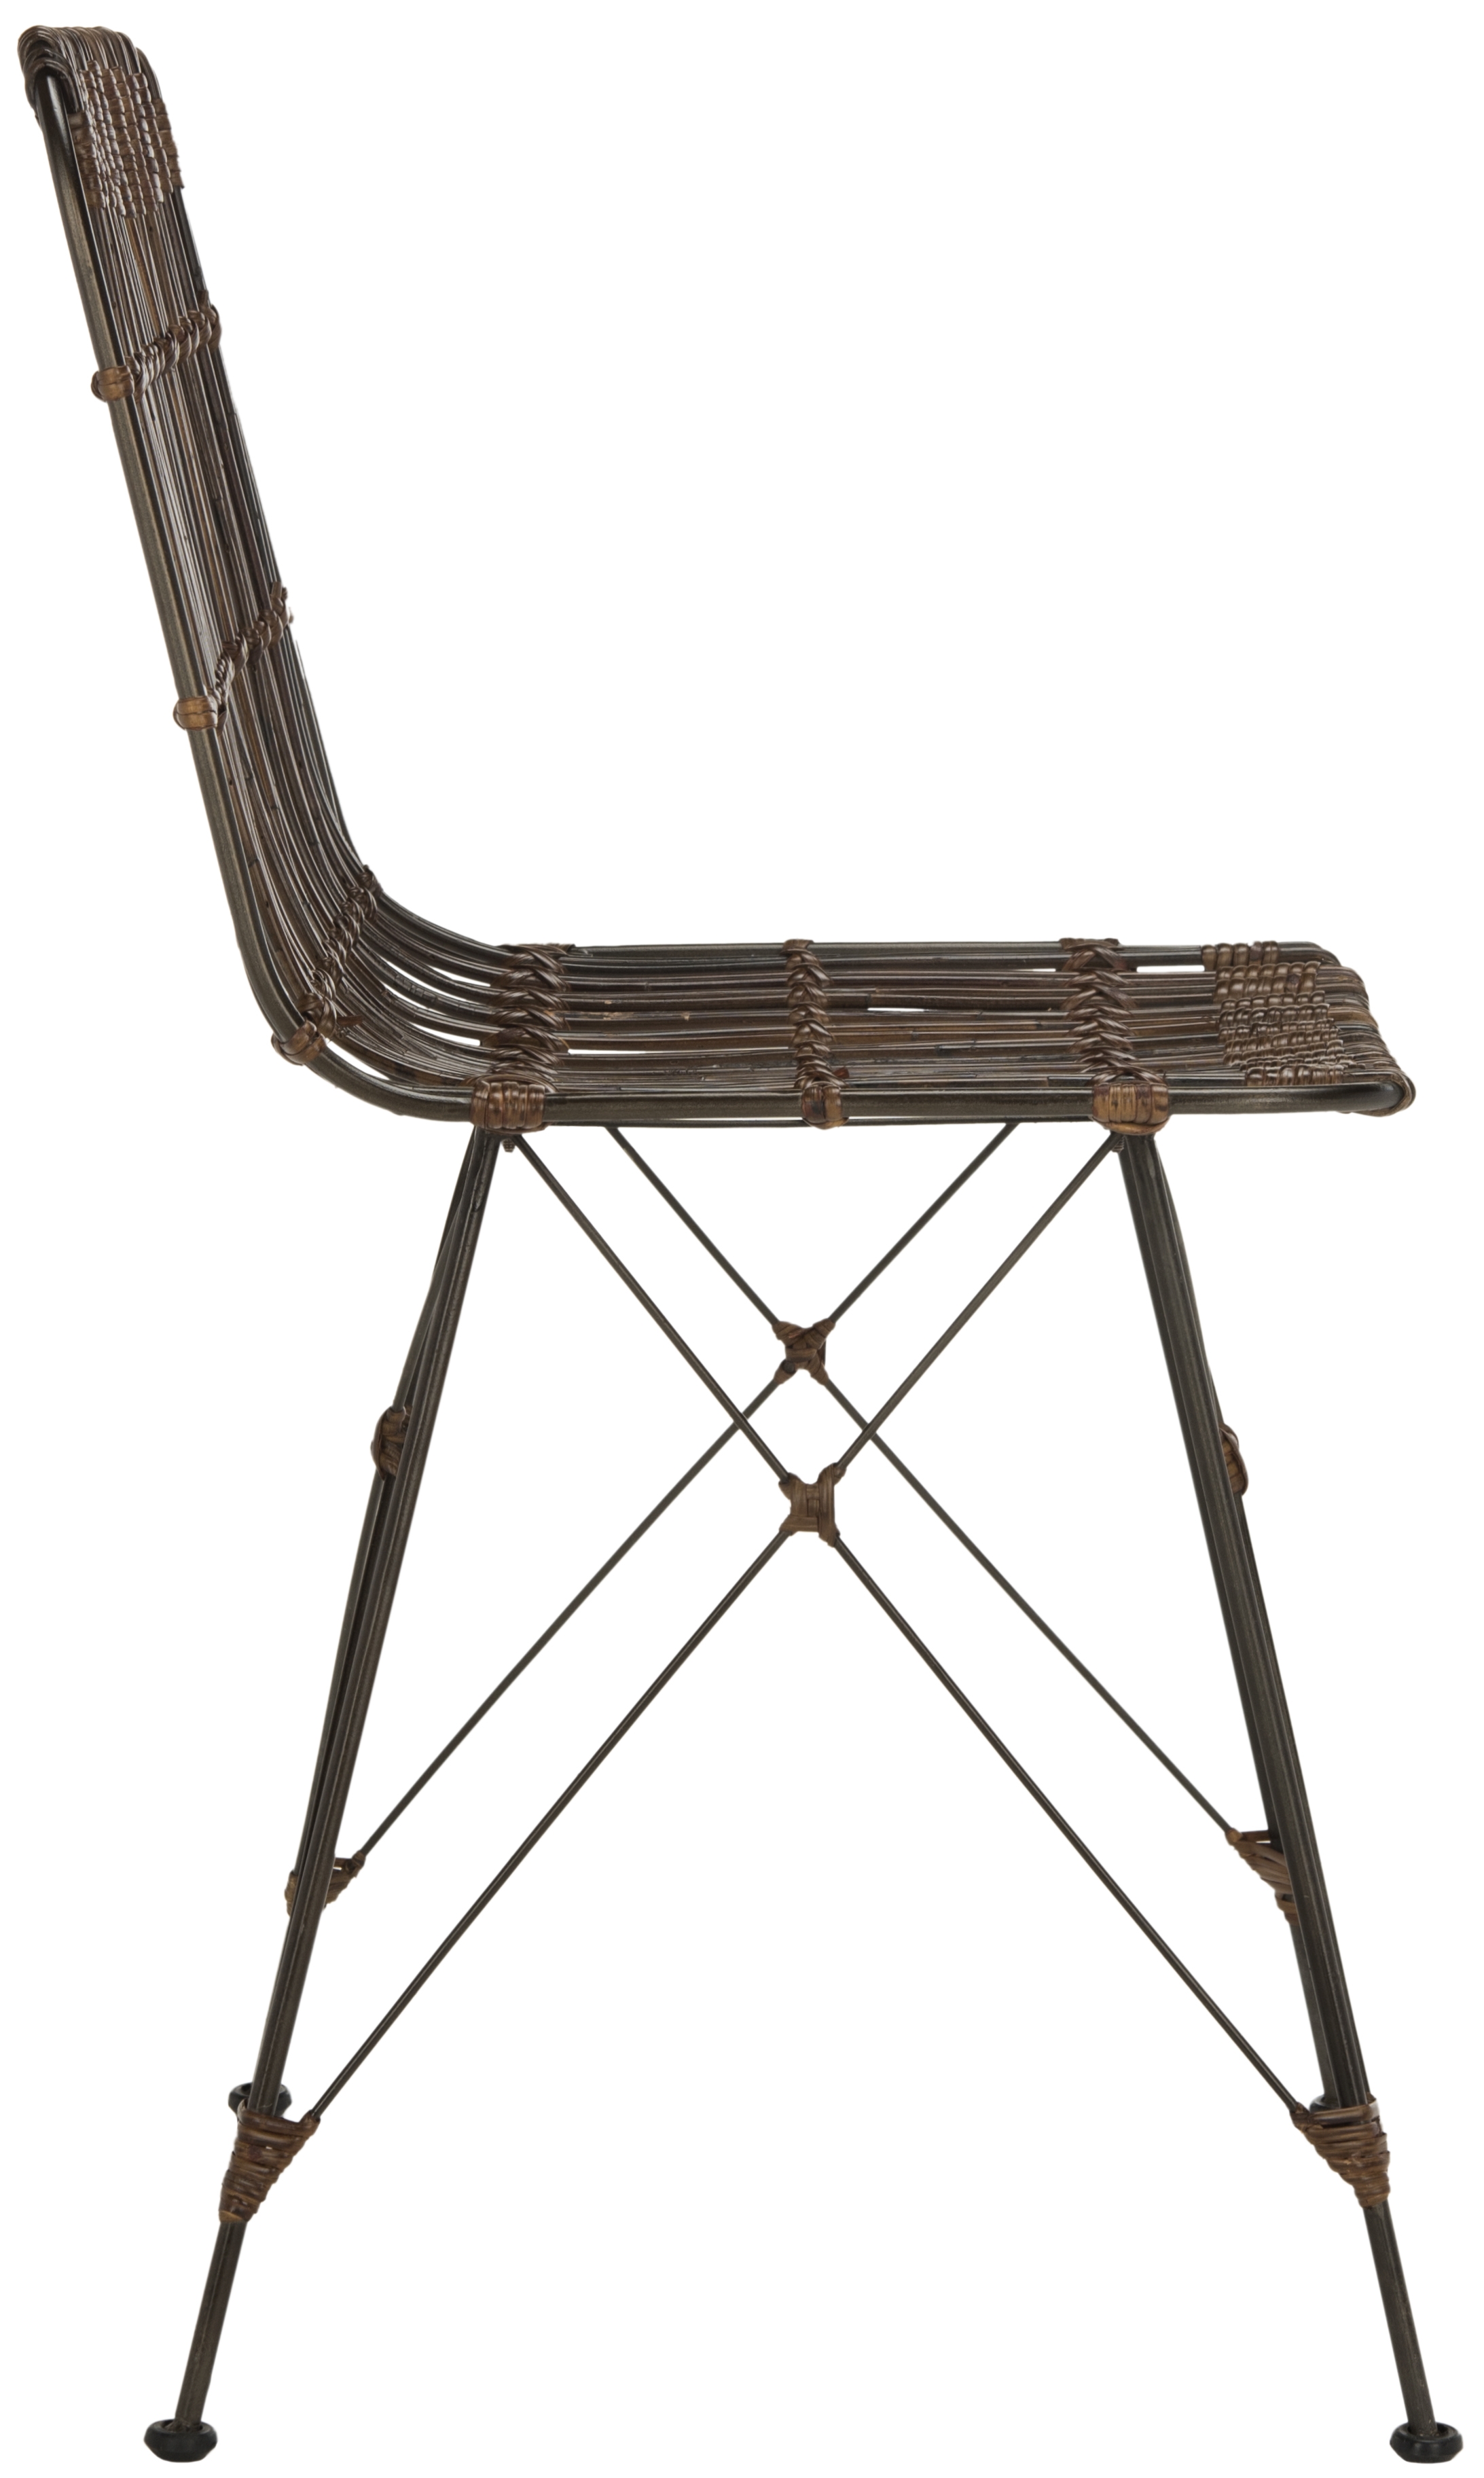 Minerva Wicker Dining Chair (Set of 2) - Croco Brown - Arlo Home - Image 3